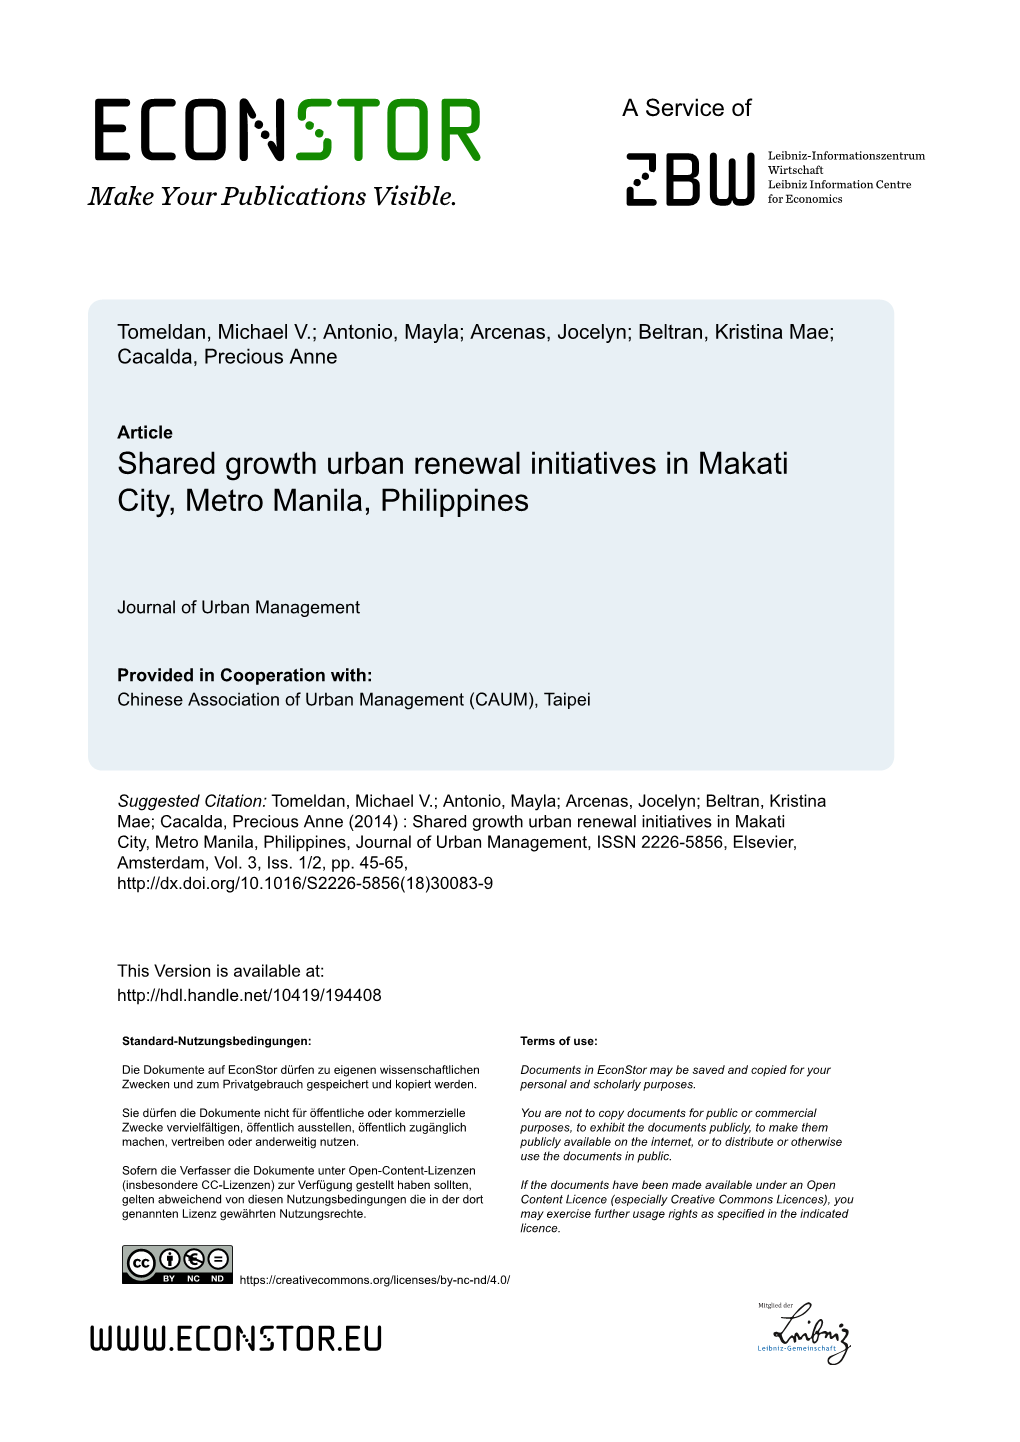 Shared Growth Urban Renewal Initiatives in Makati City, Metro Manila, Philippines